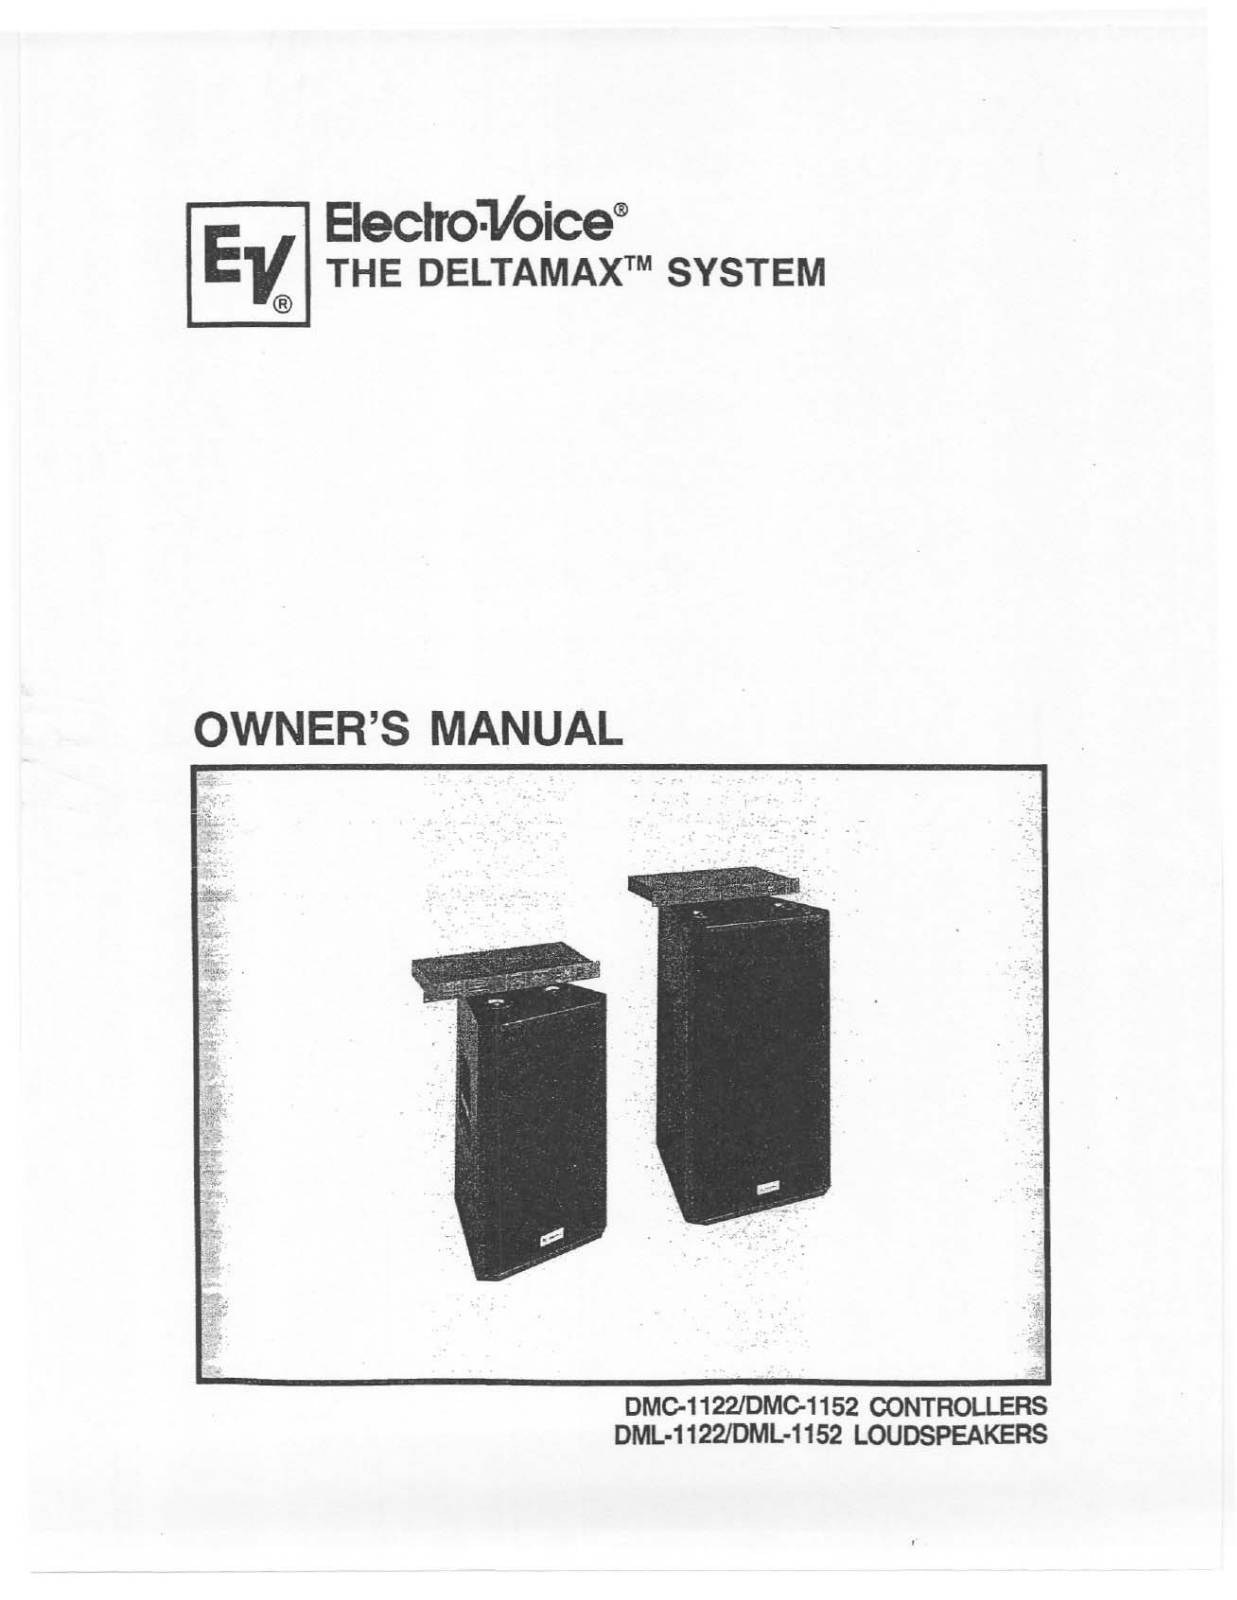 Electro-voice DML-1152, DMC-1122, DMC-1152 User Manual